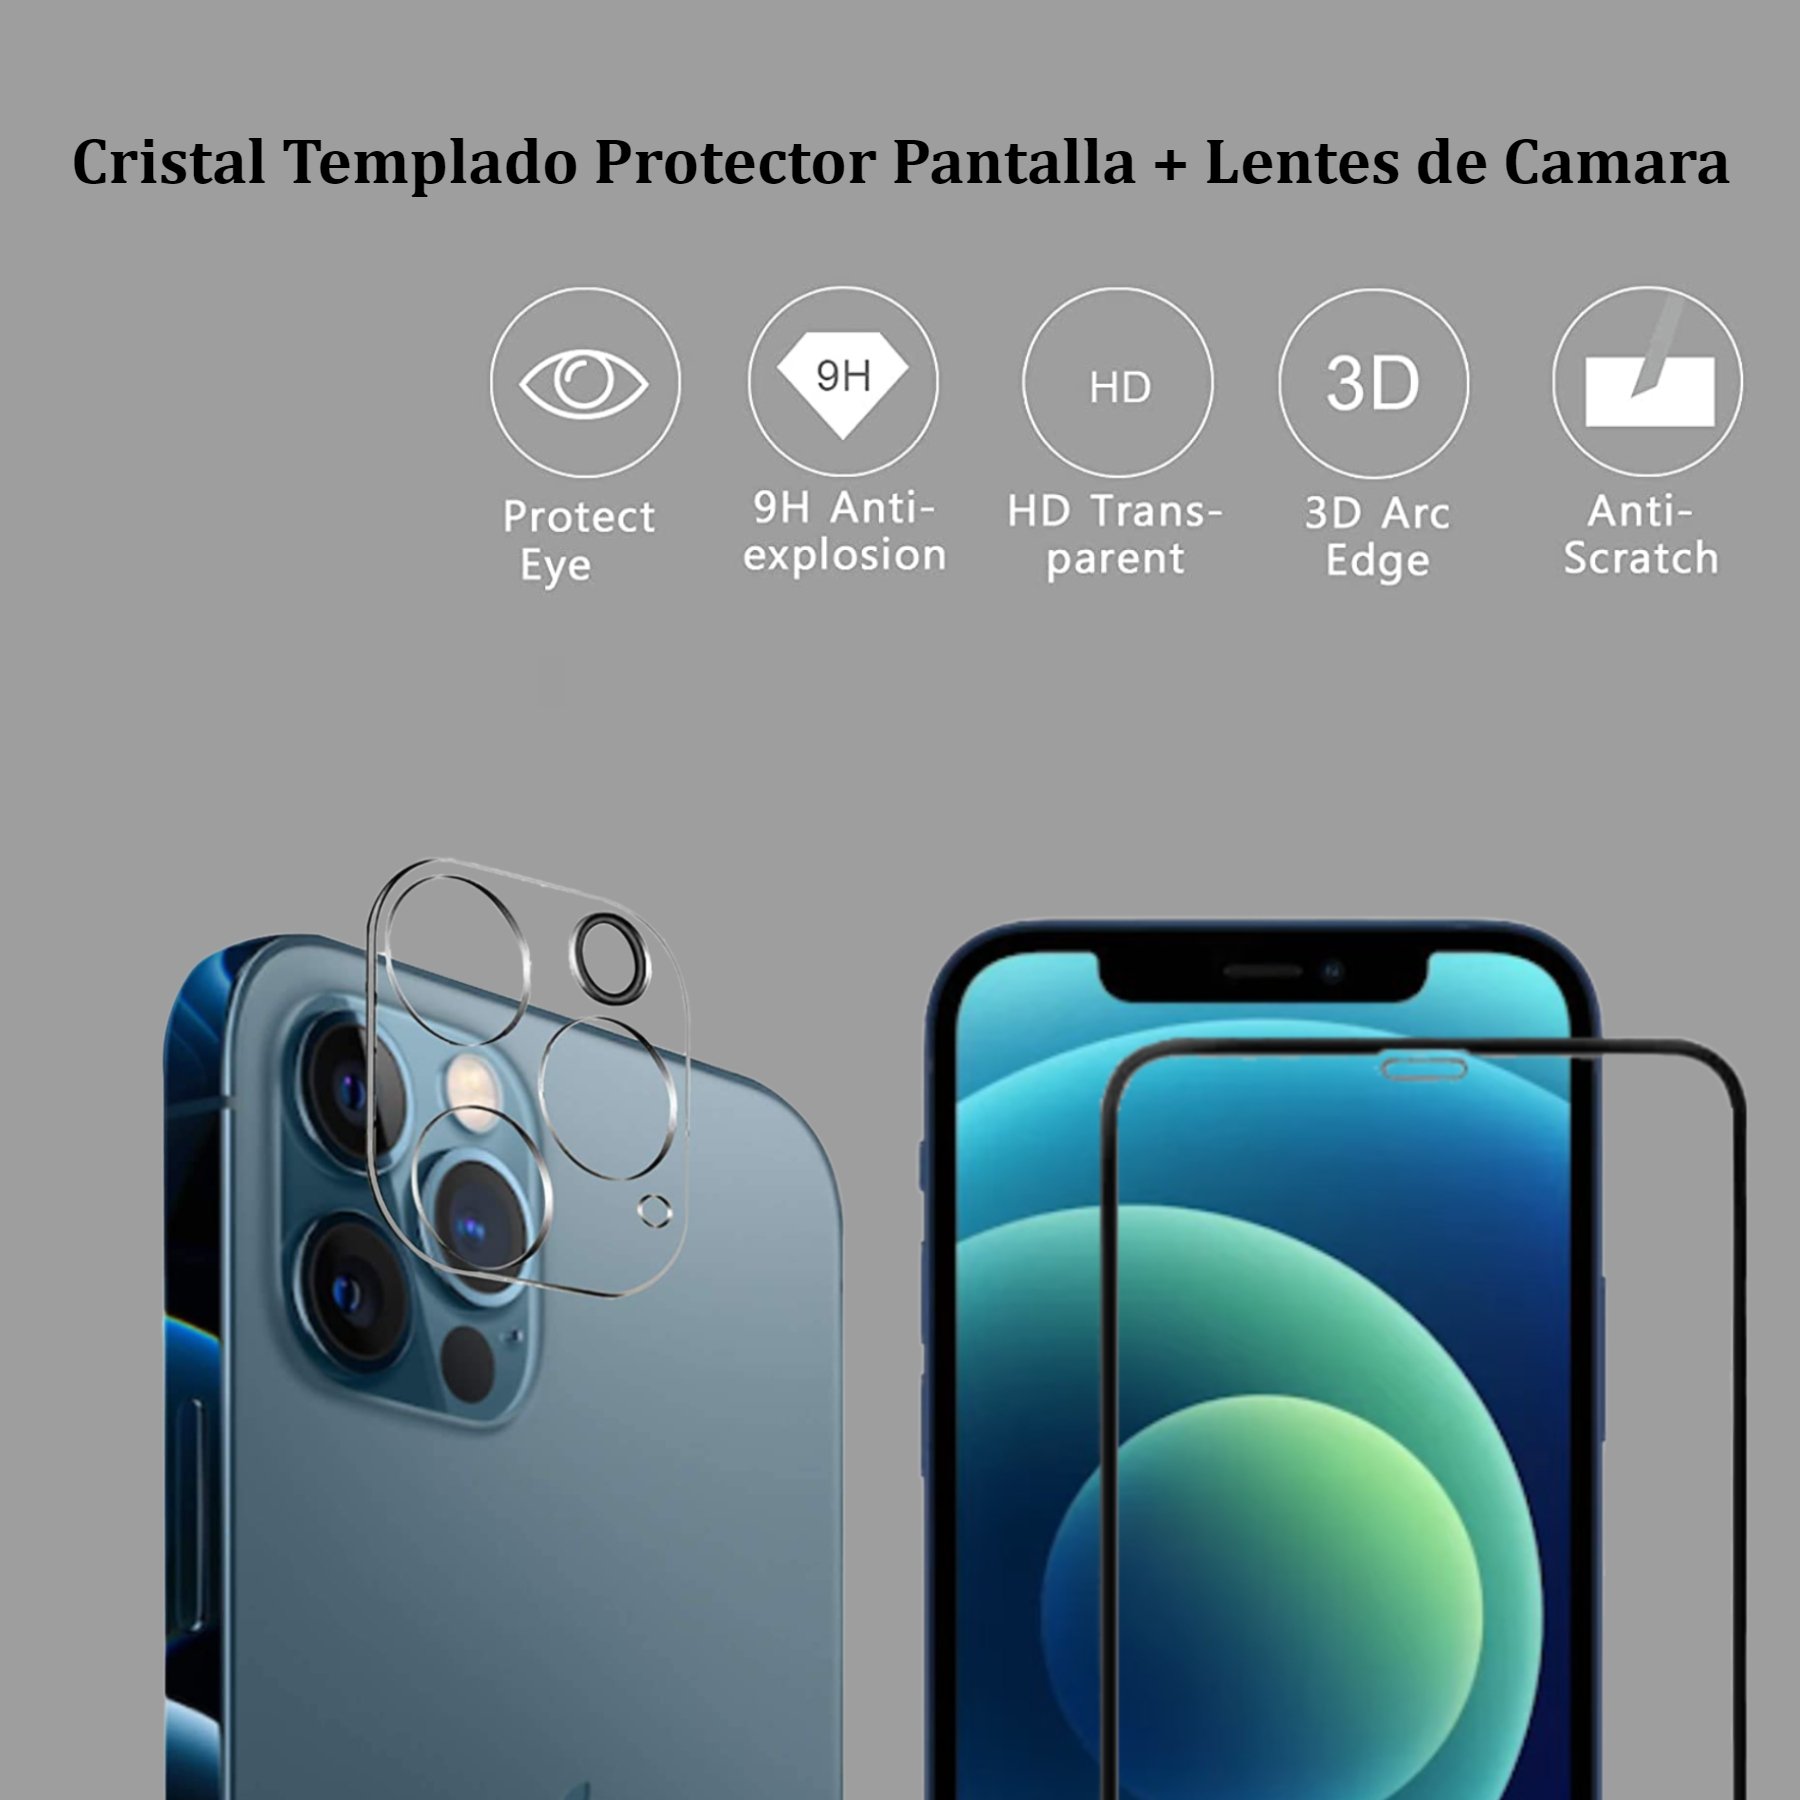 Cristal Templado Pantalla + Protector de Lente Cámara Compatible